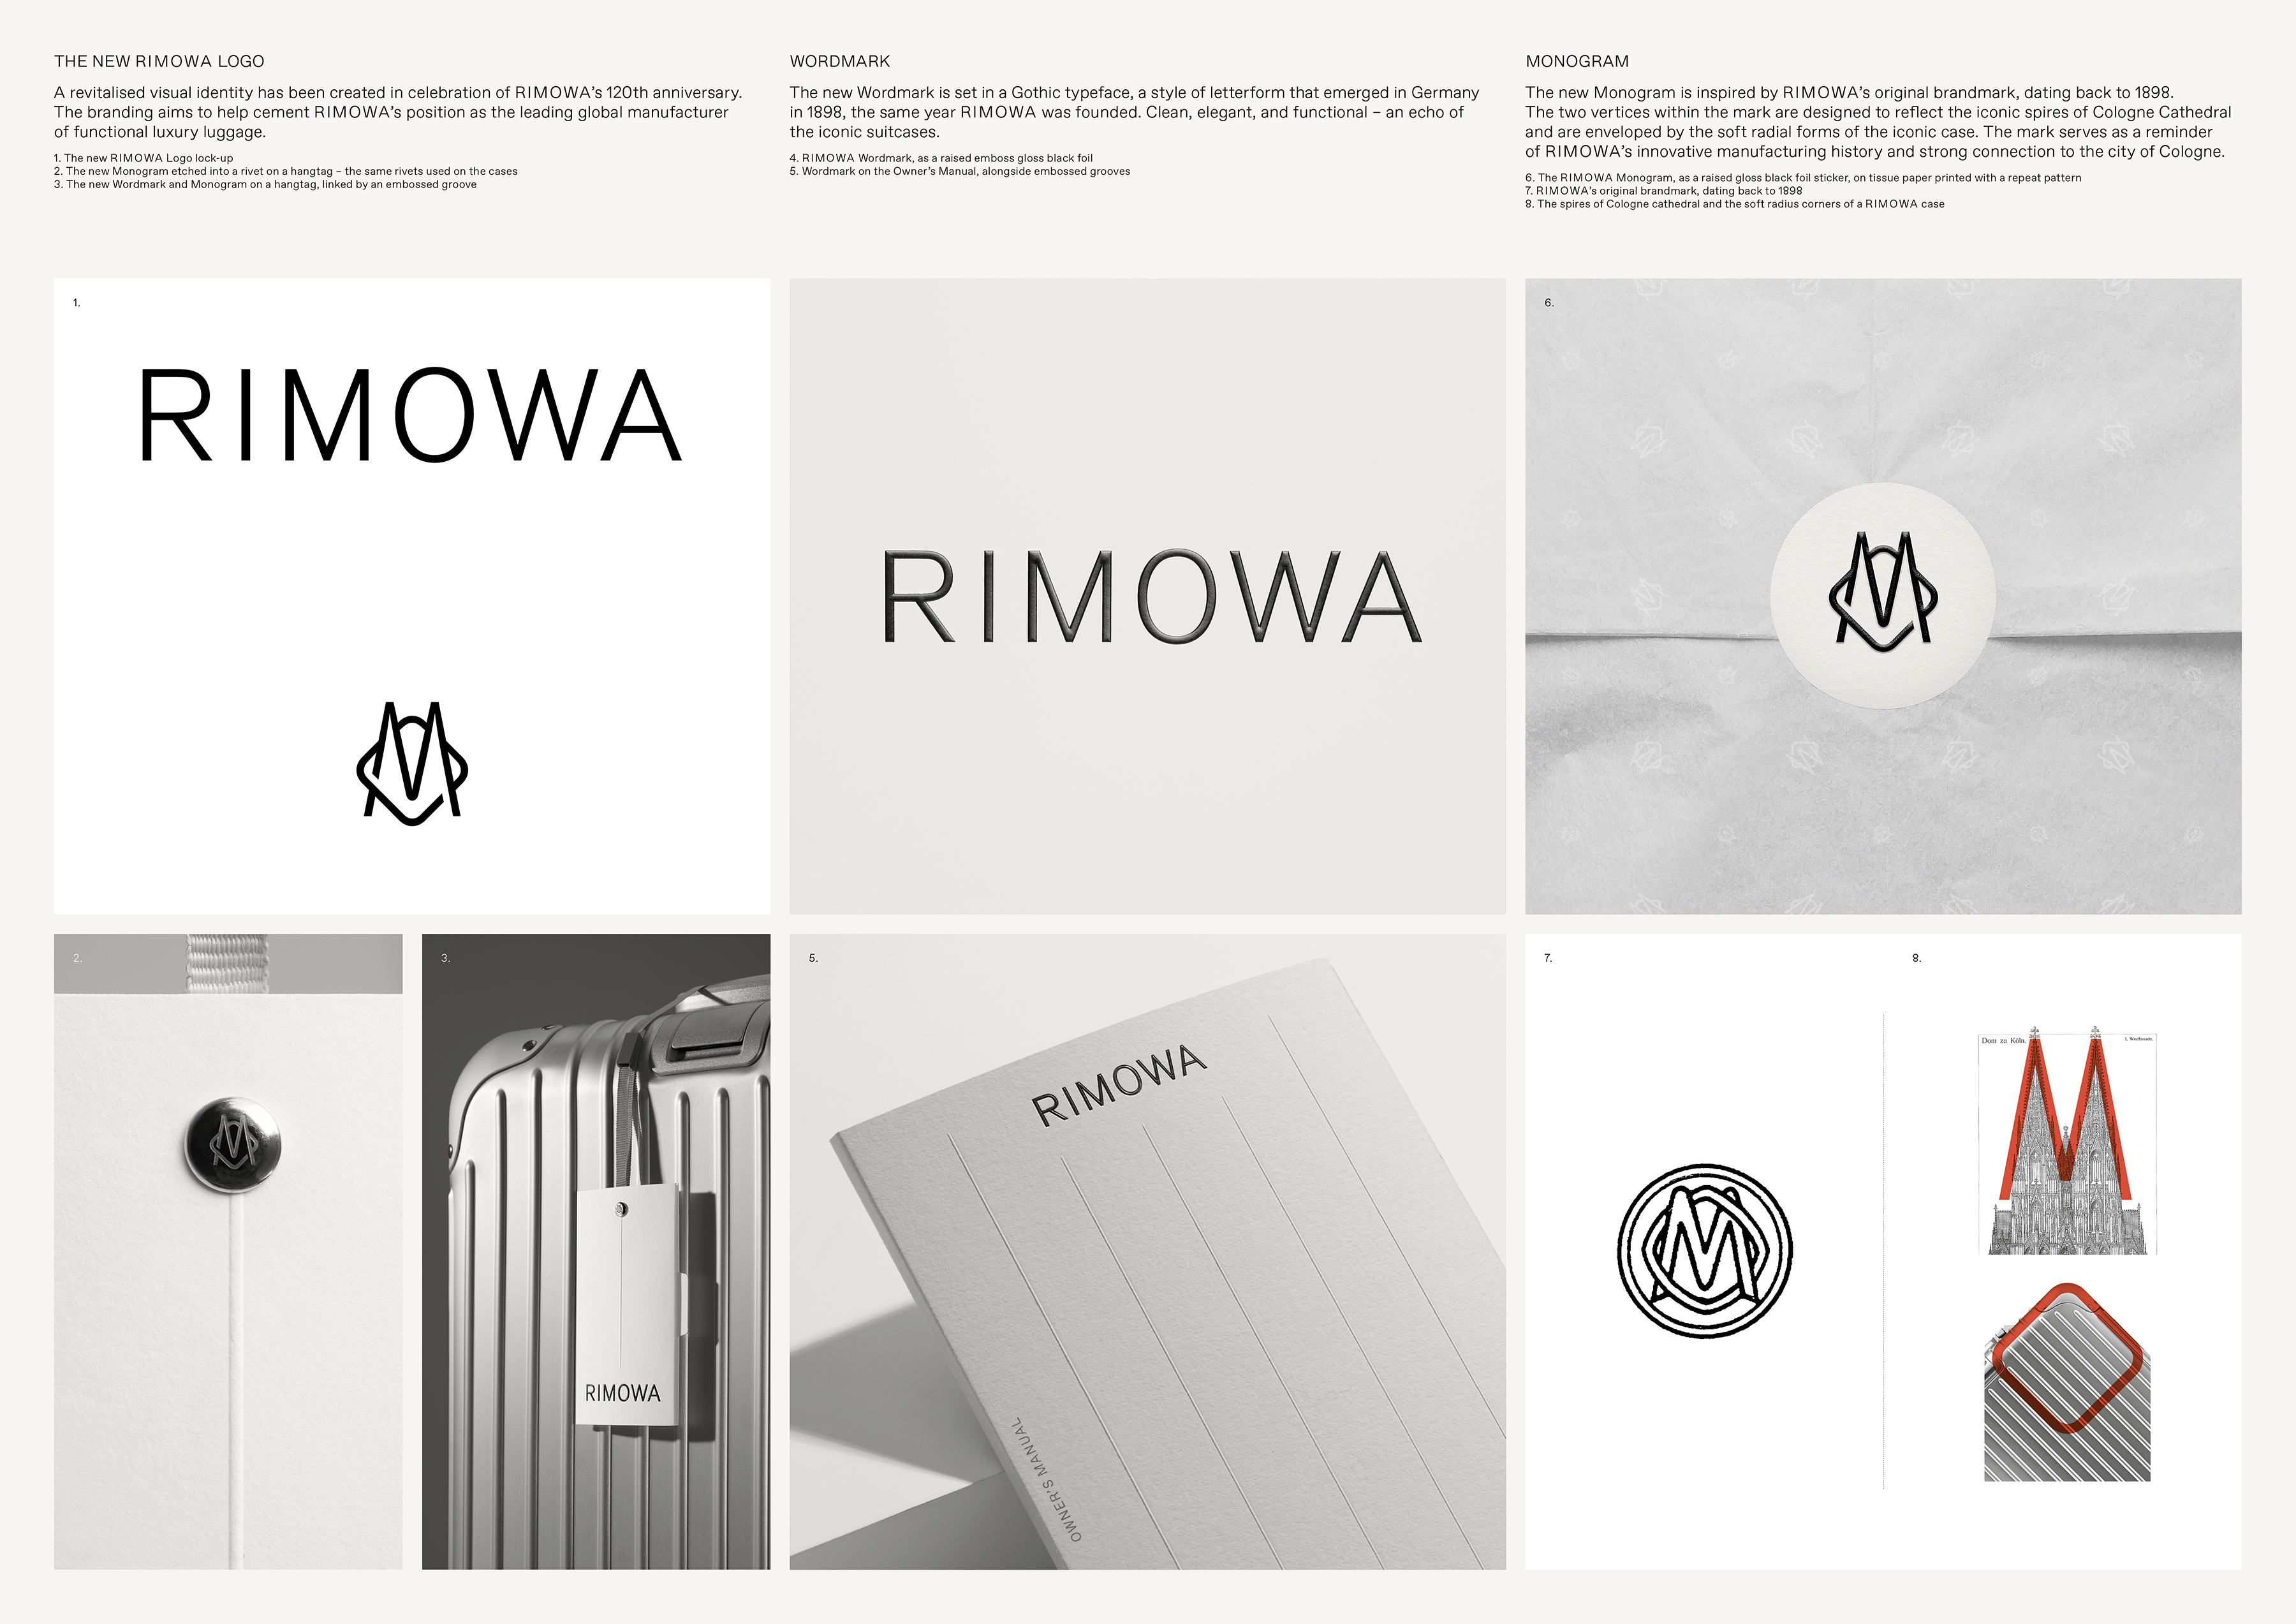 rimowa brand identity